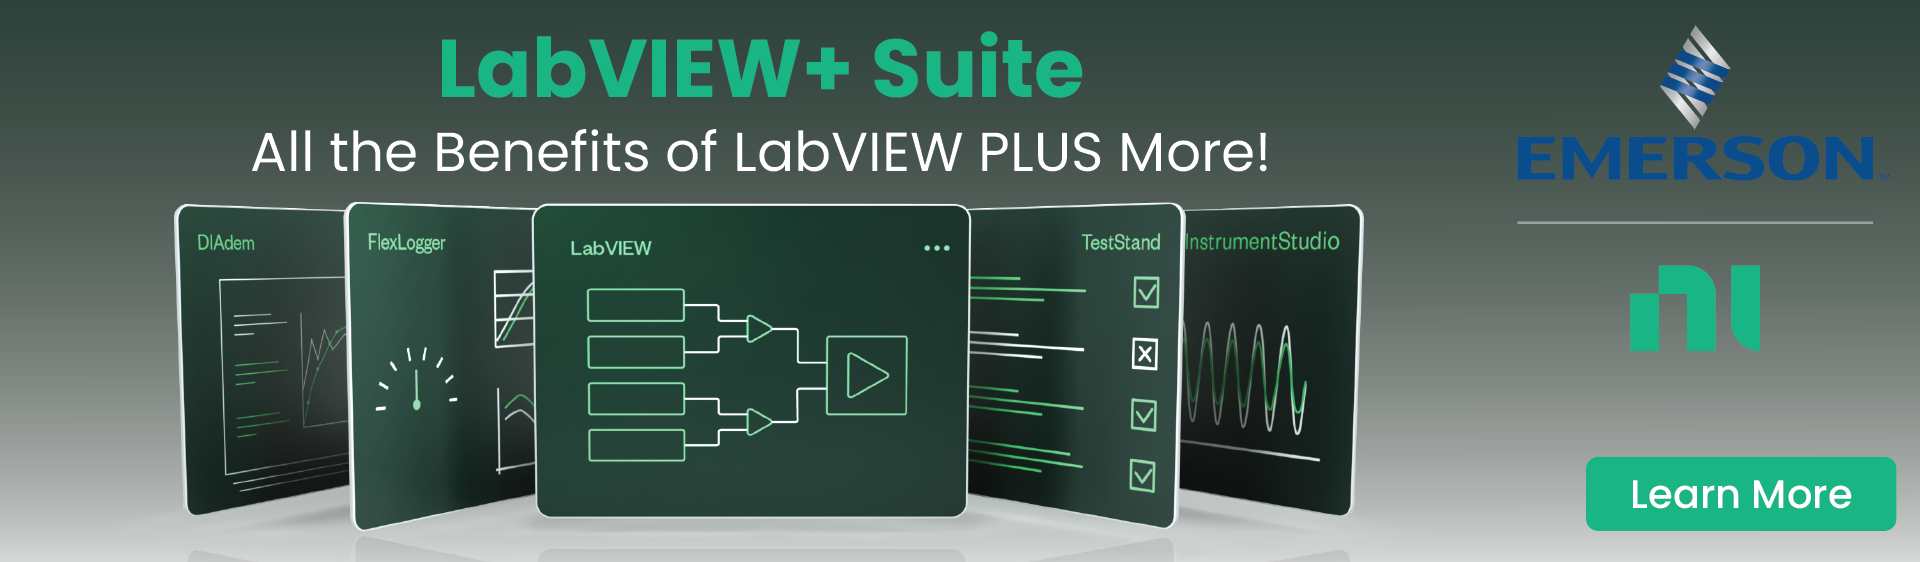 LabVIEW+Suite